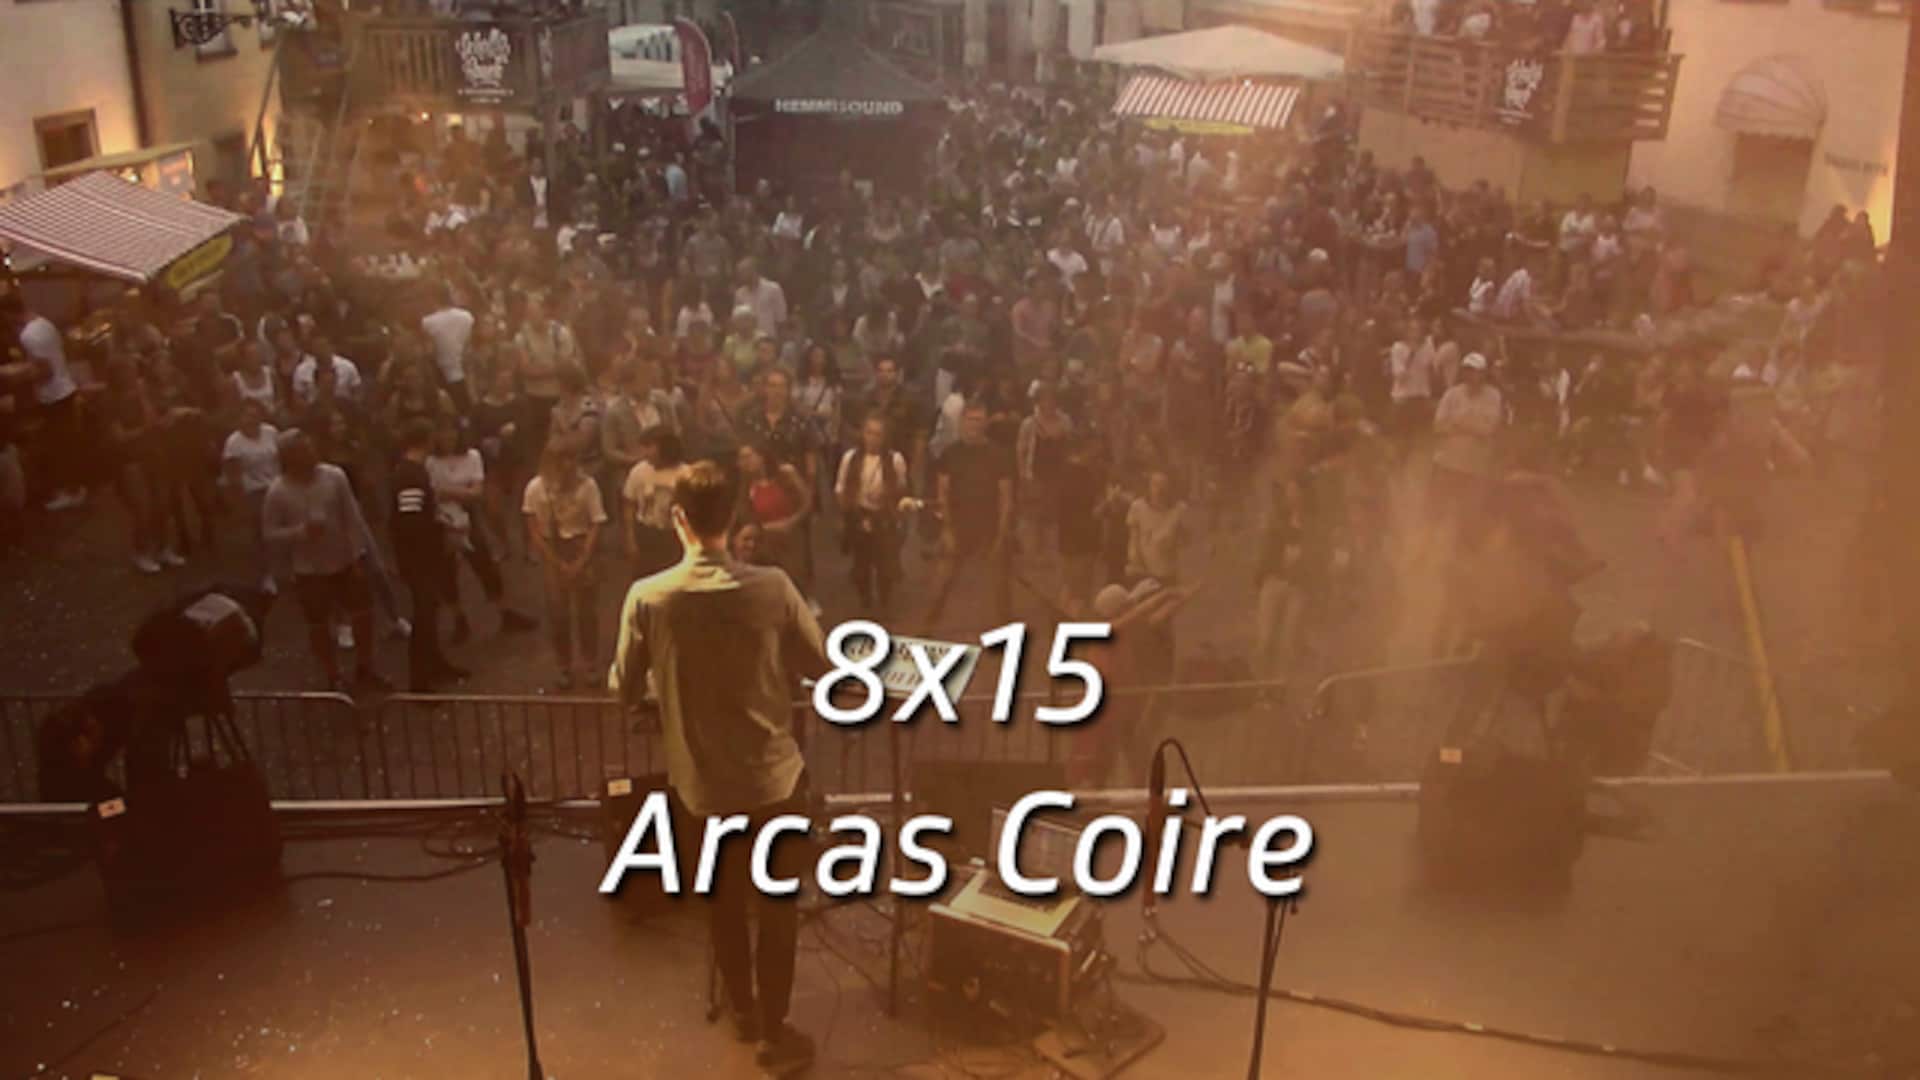 8x15 - Arcas Coire 